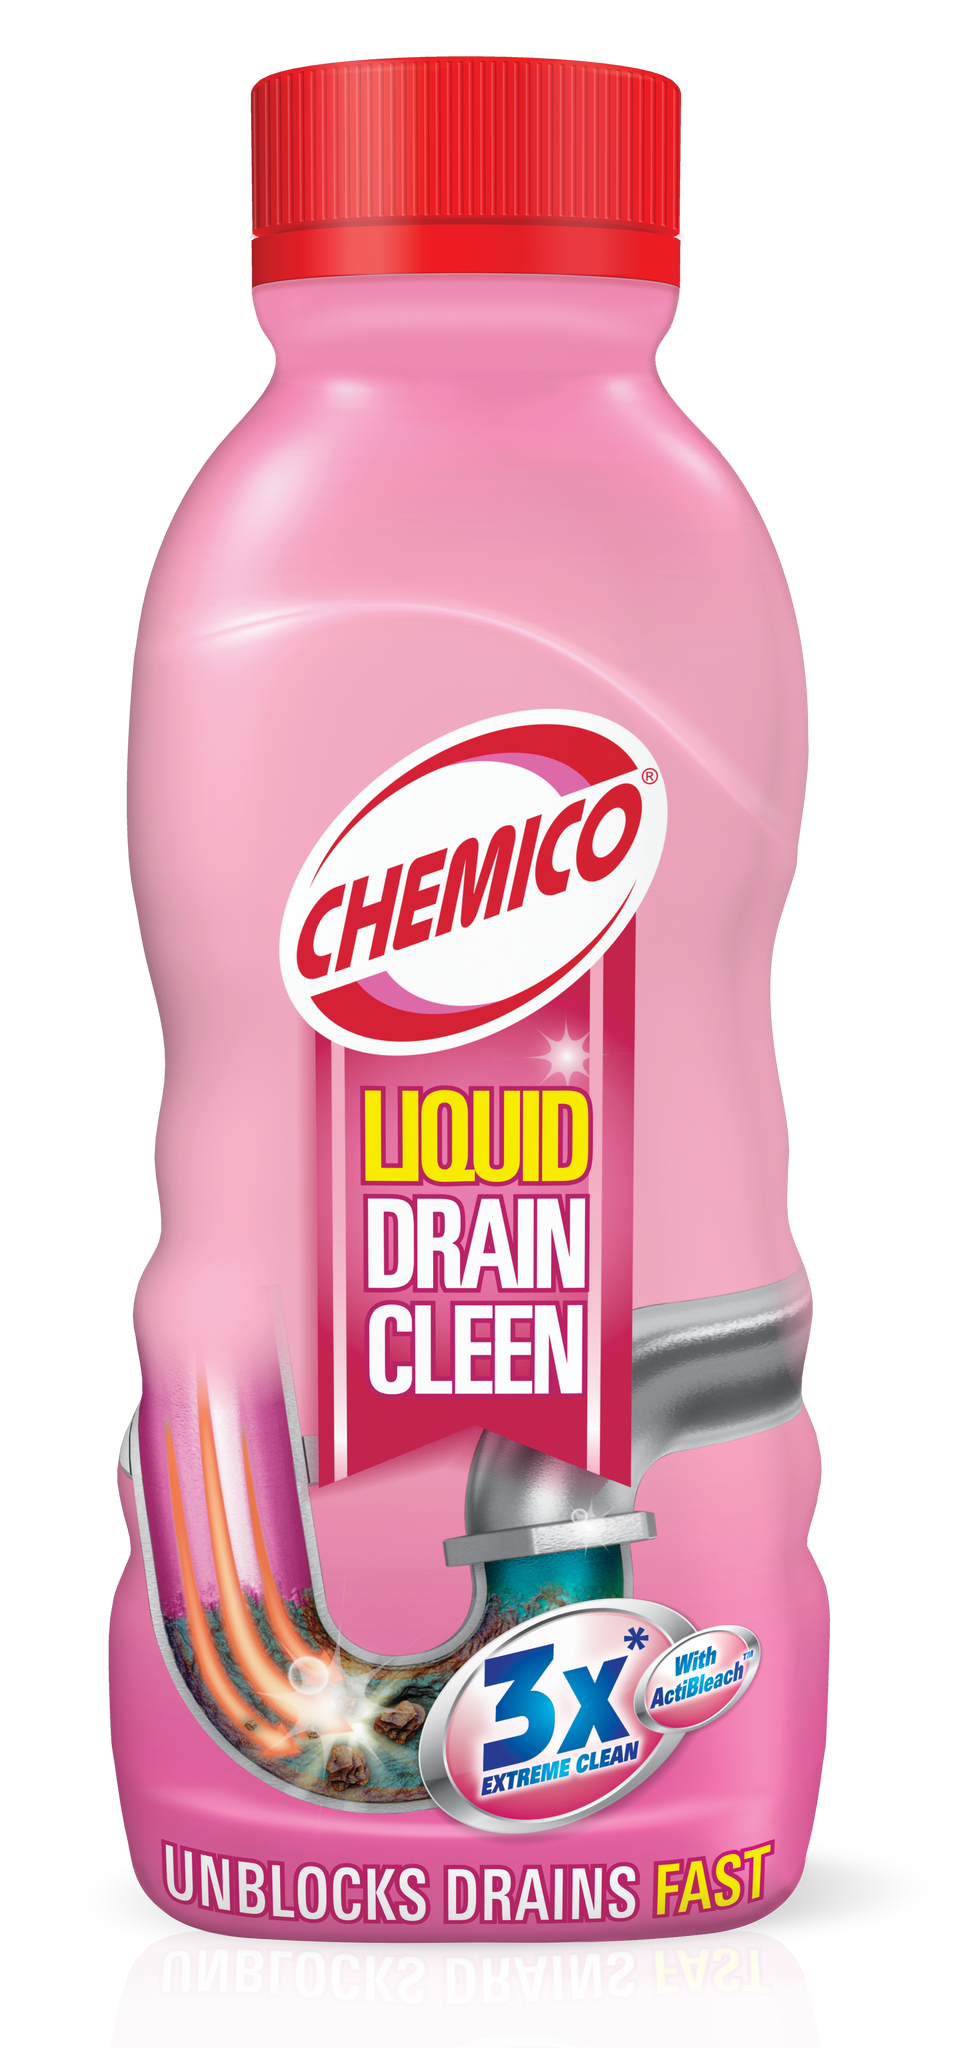 Chemico - Drain Cleen - Liquid - 500ml